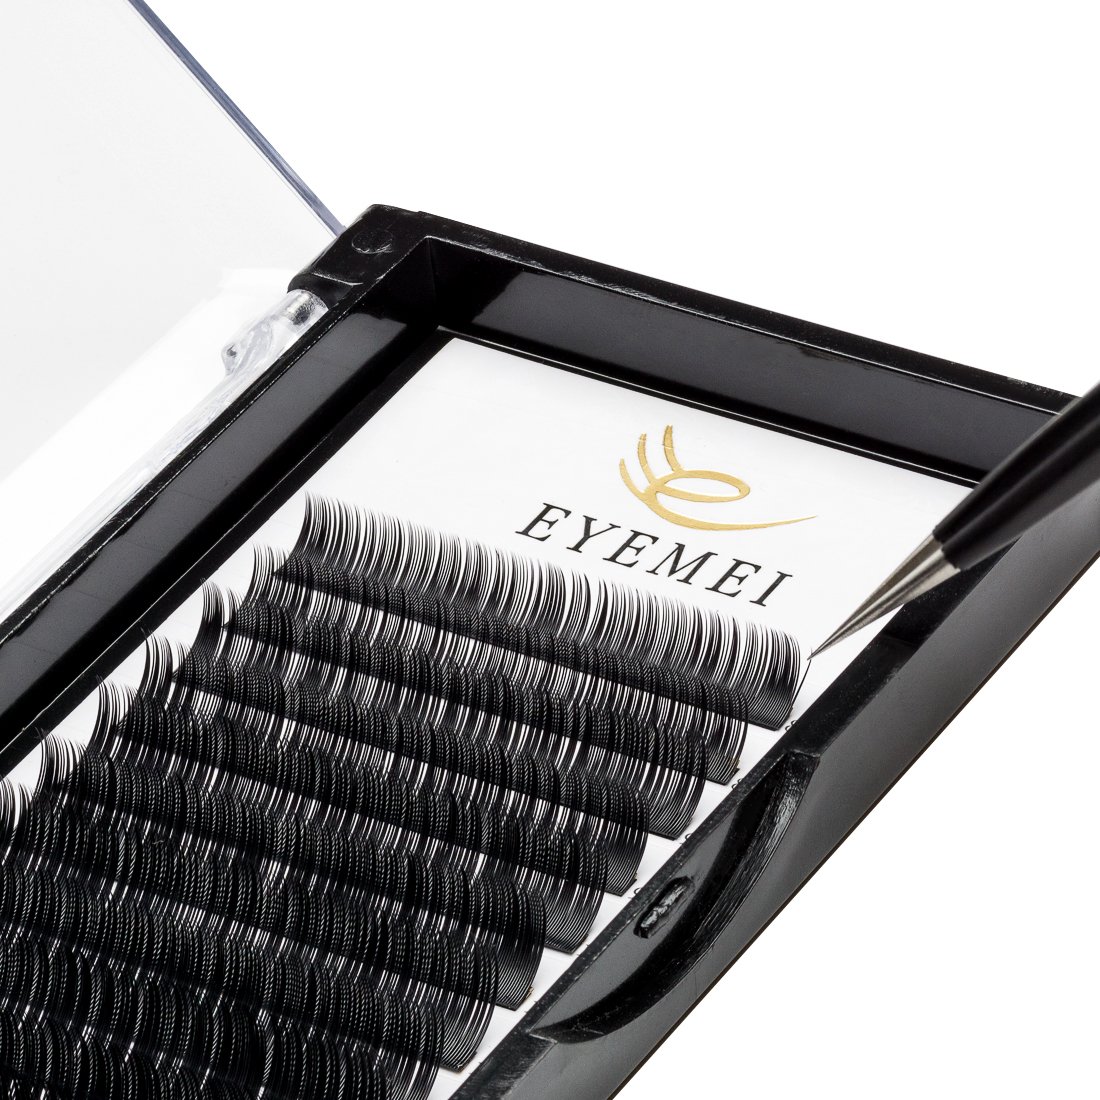 Eyelash Extensions 0.20mm C Curl 8-15mm Mixed Faux Mink Eyelash Extension Supplies Individual Eyelashes Light Professional Salon Use Black False Lashes Mink Lashes Extensions by EYEMEI (0.20-C-MIXED)